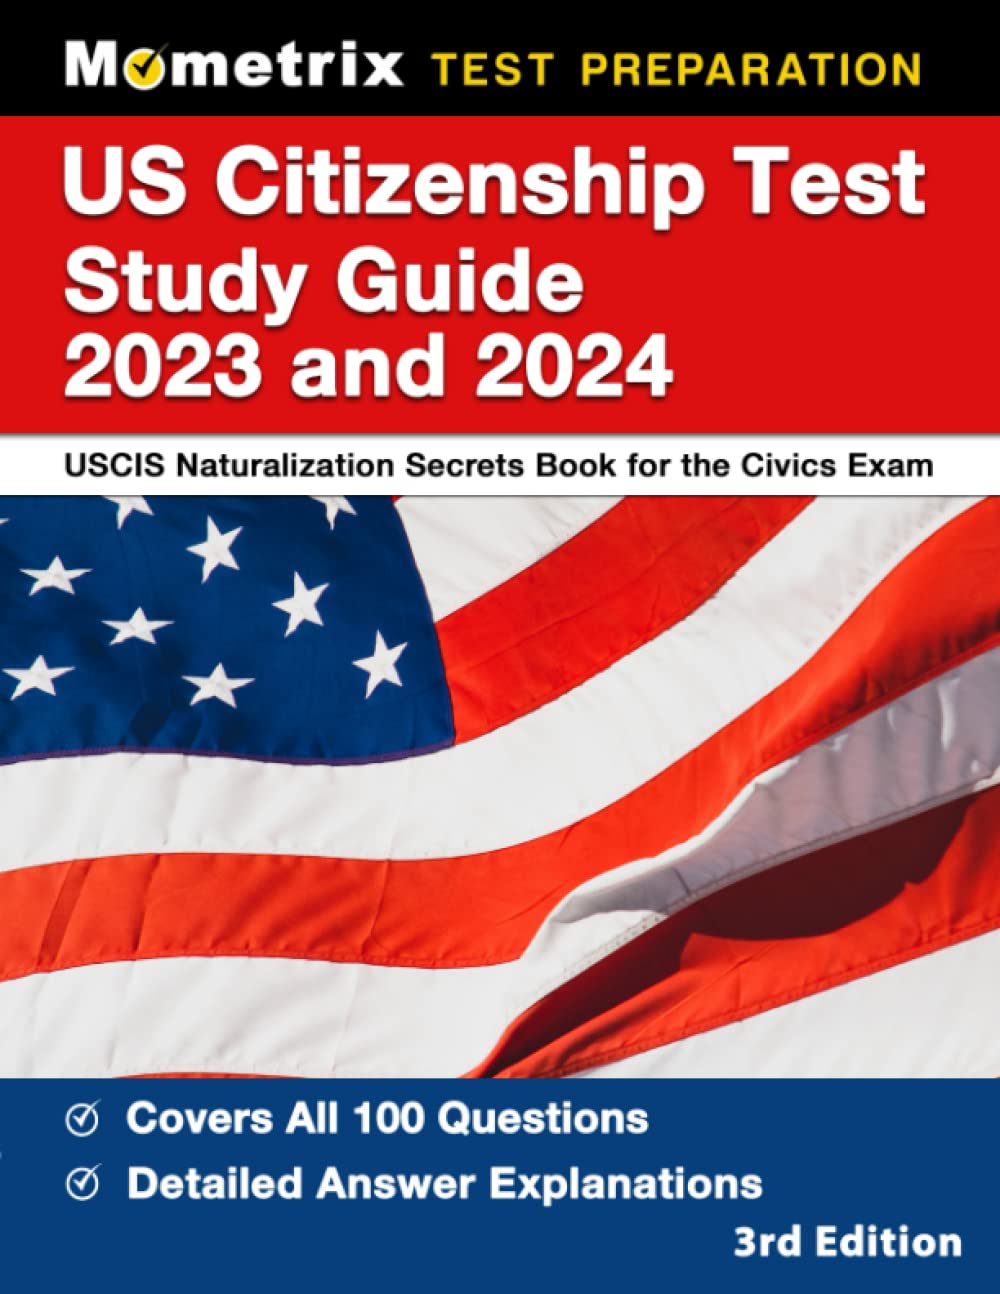 Mua US Citizenship Test Study Guide 2023 and 2024 USCIS